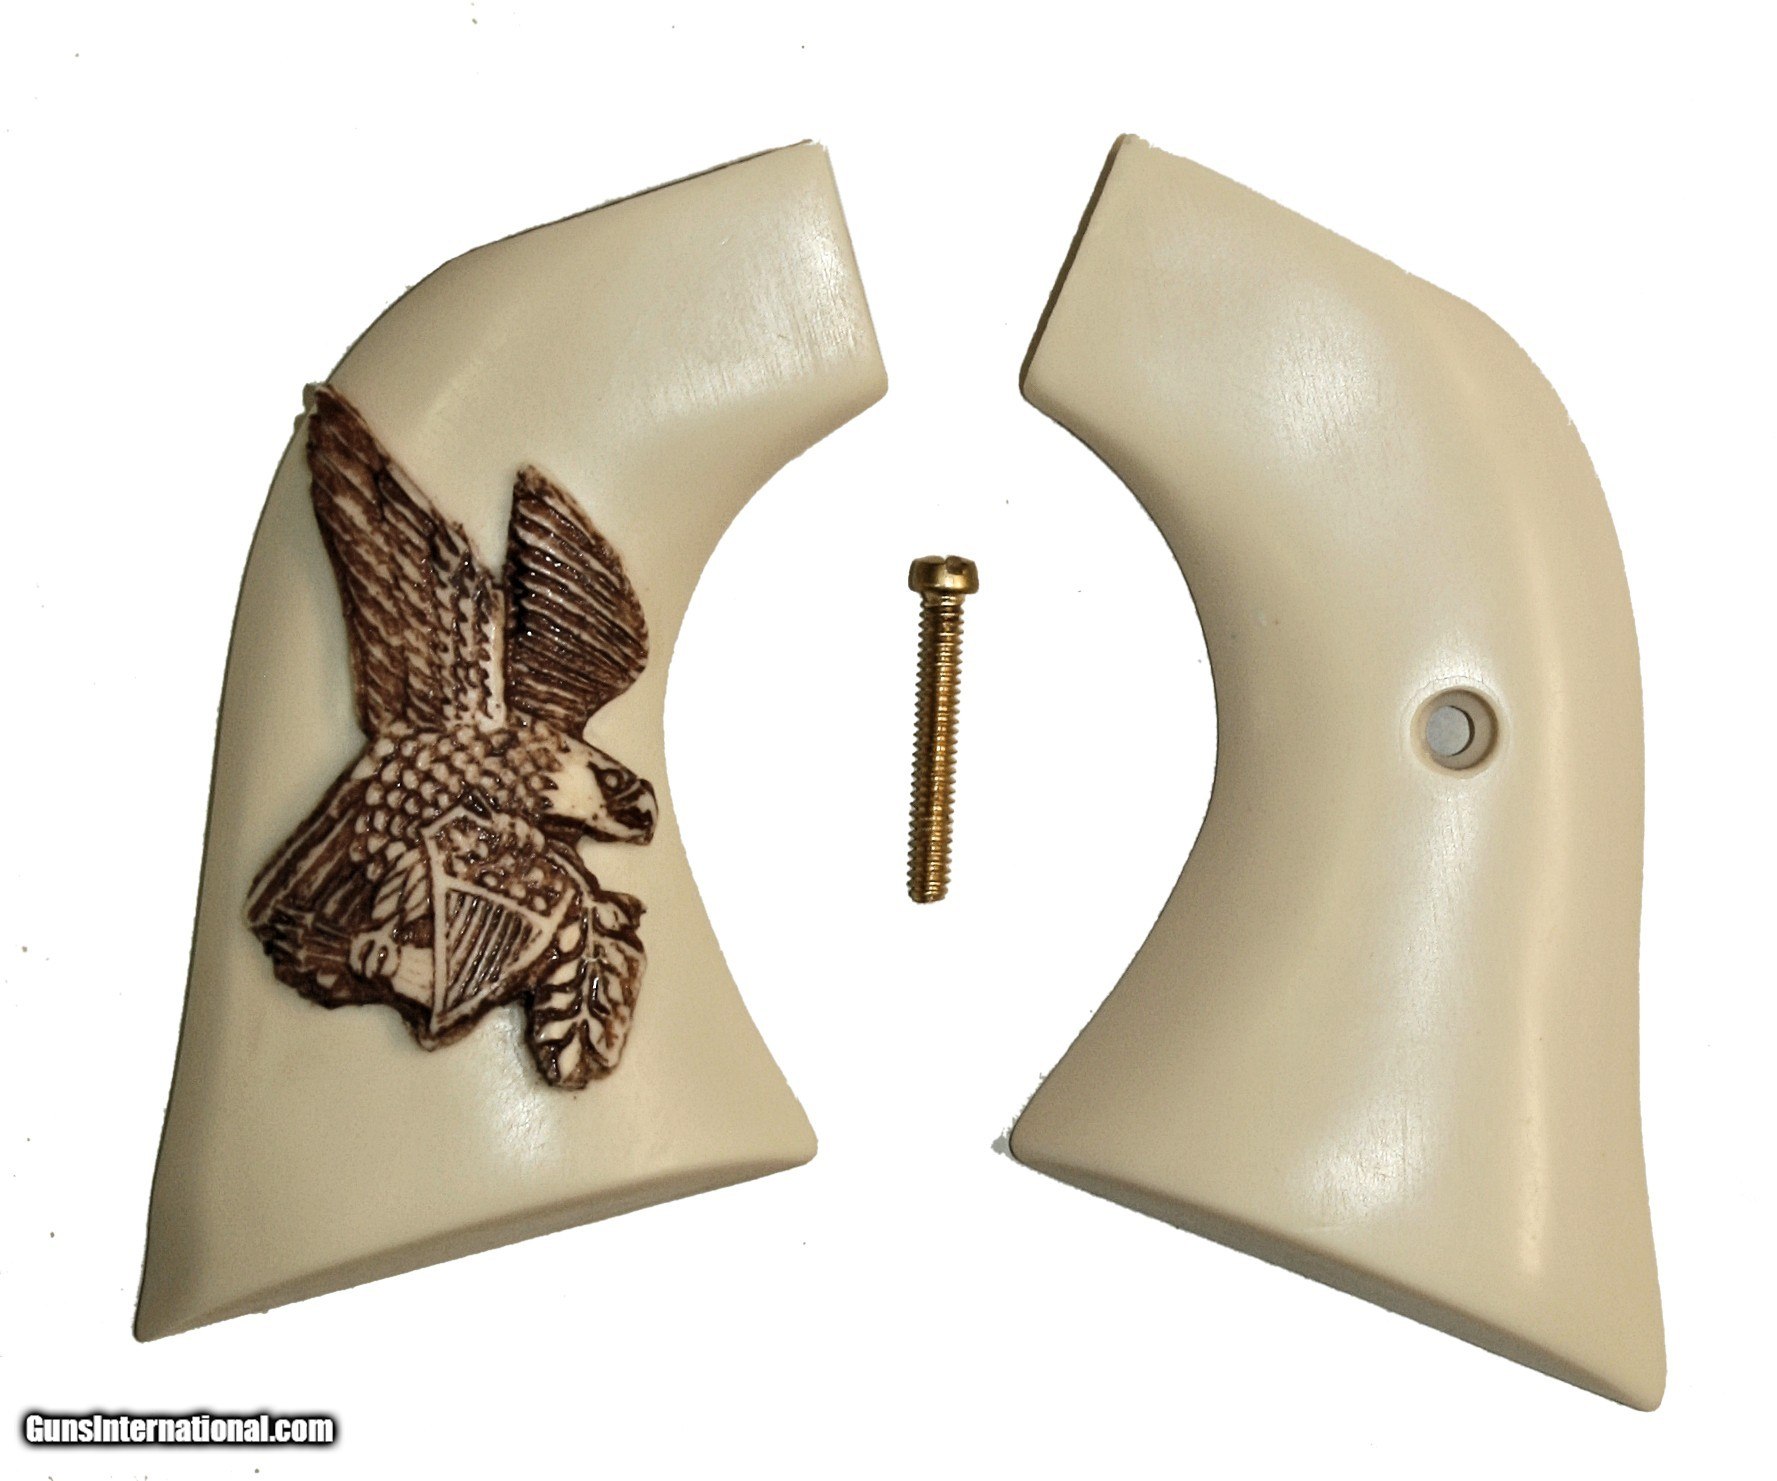 Ruger Wrangler Ivory-Like Grips, American Eagle for sale